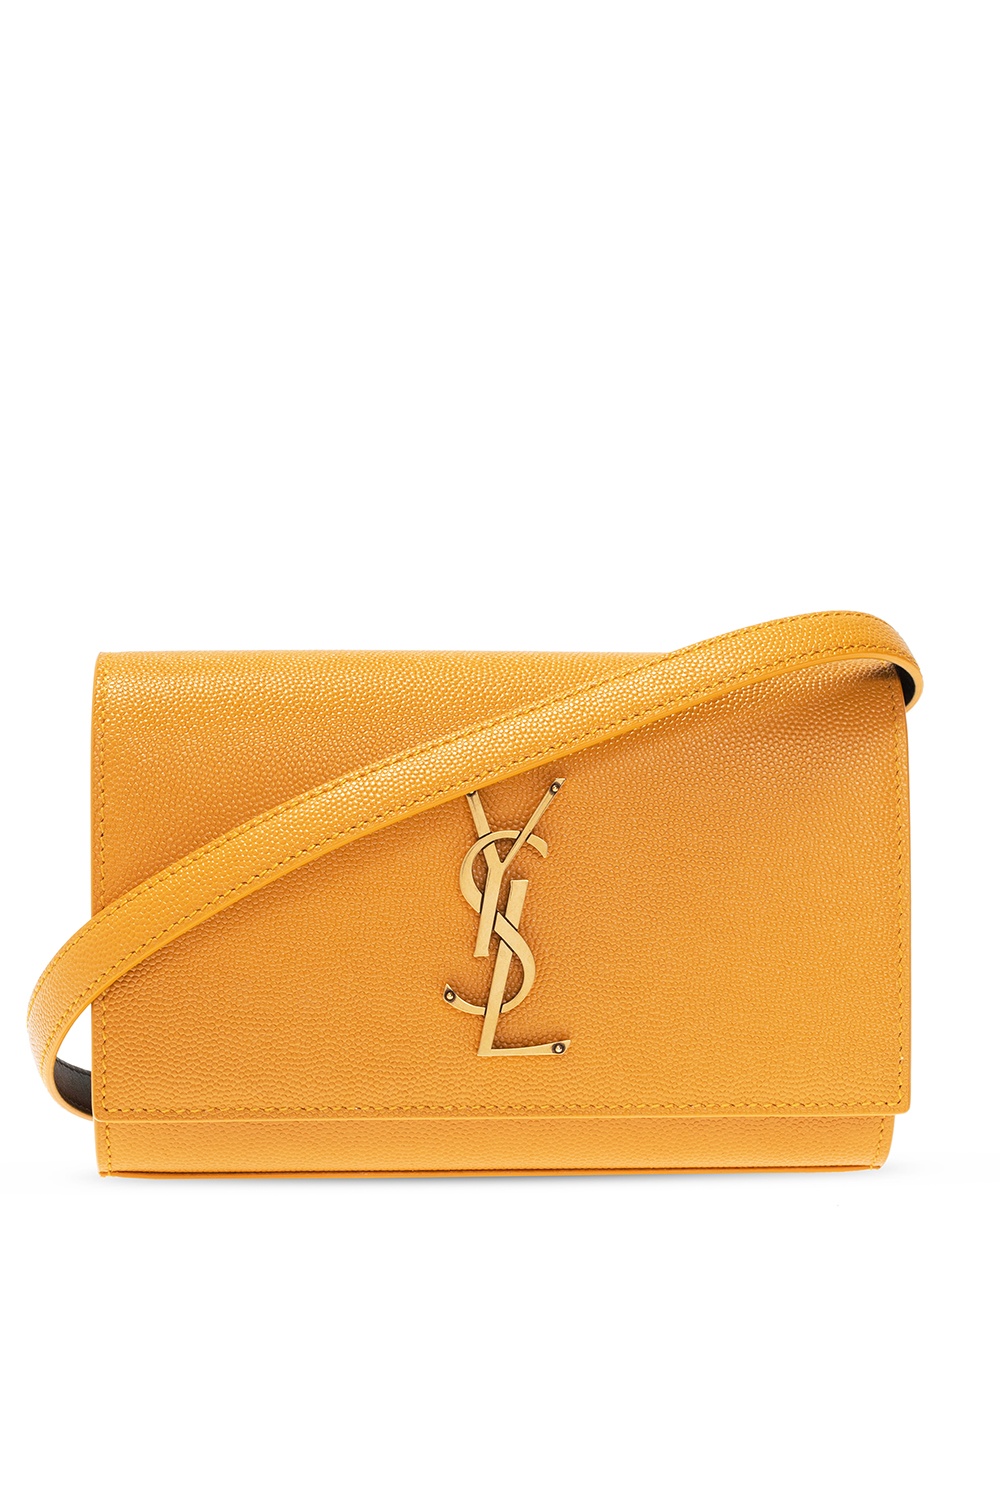 Orange 'Kate' belt bag Saint Laurent - Vitkac TW